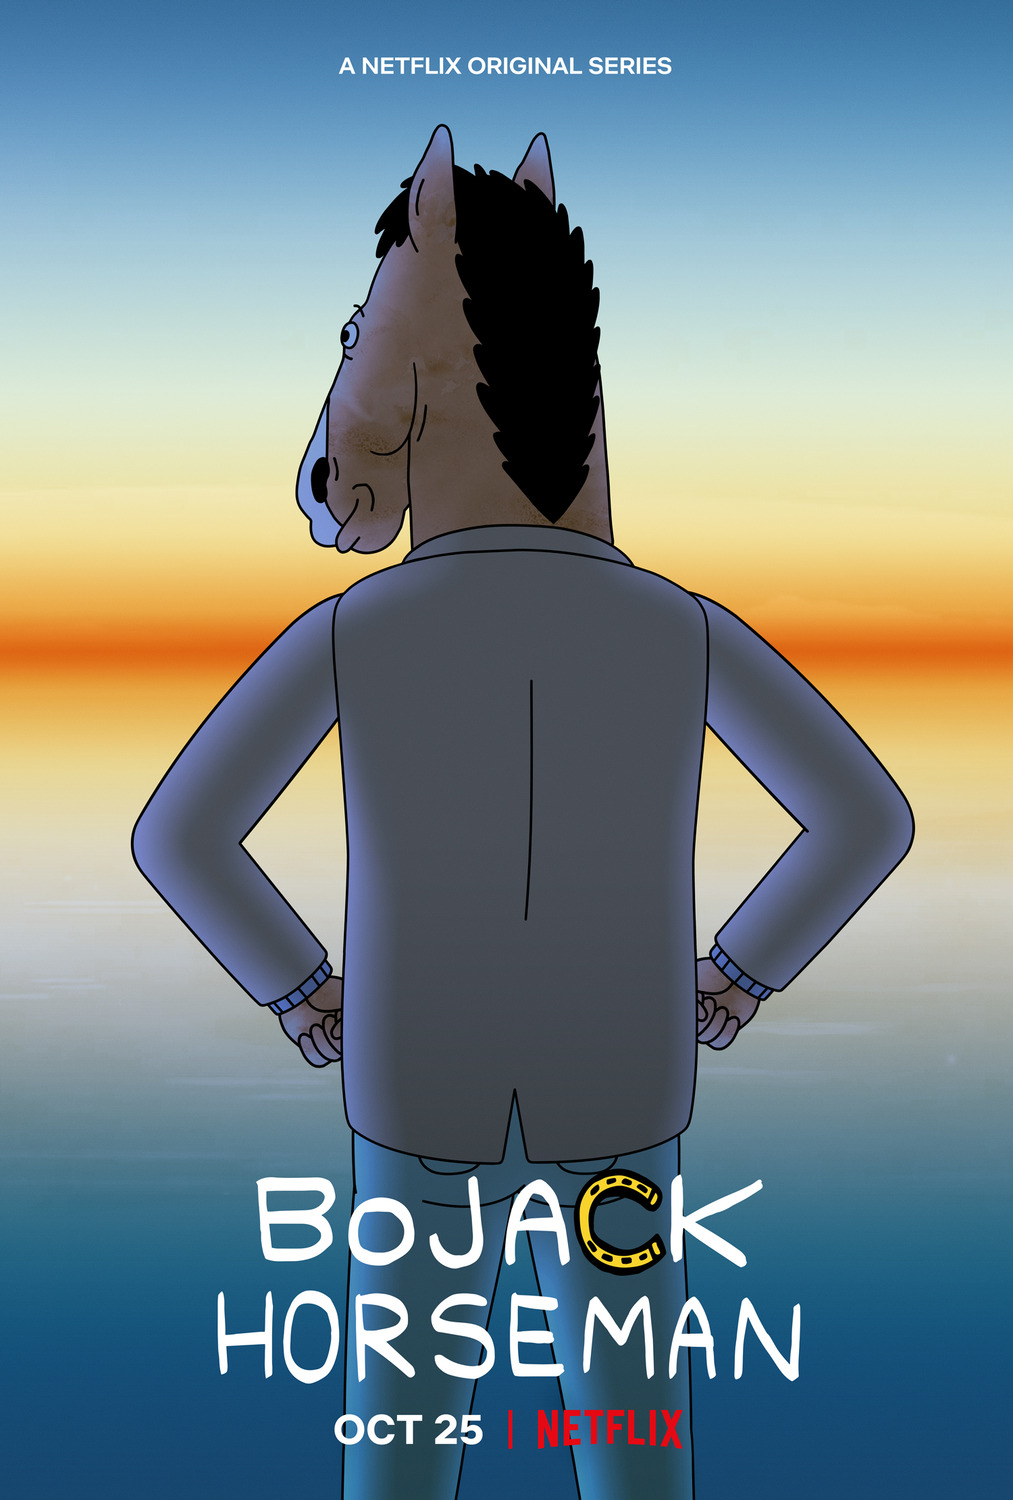 Extra Large TV Poster Image for BoJack Horseman (#8 of 9)